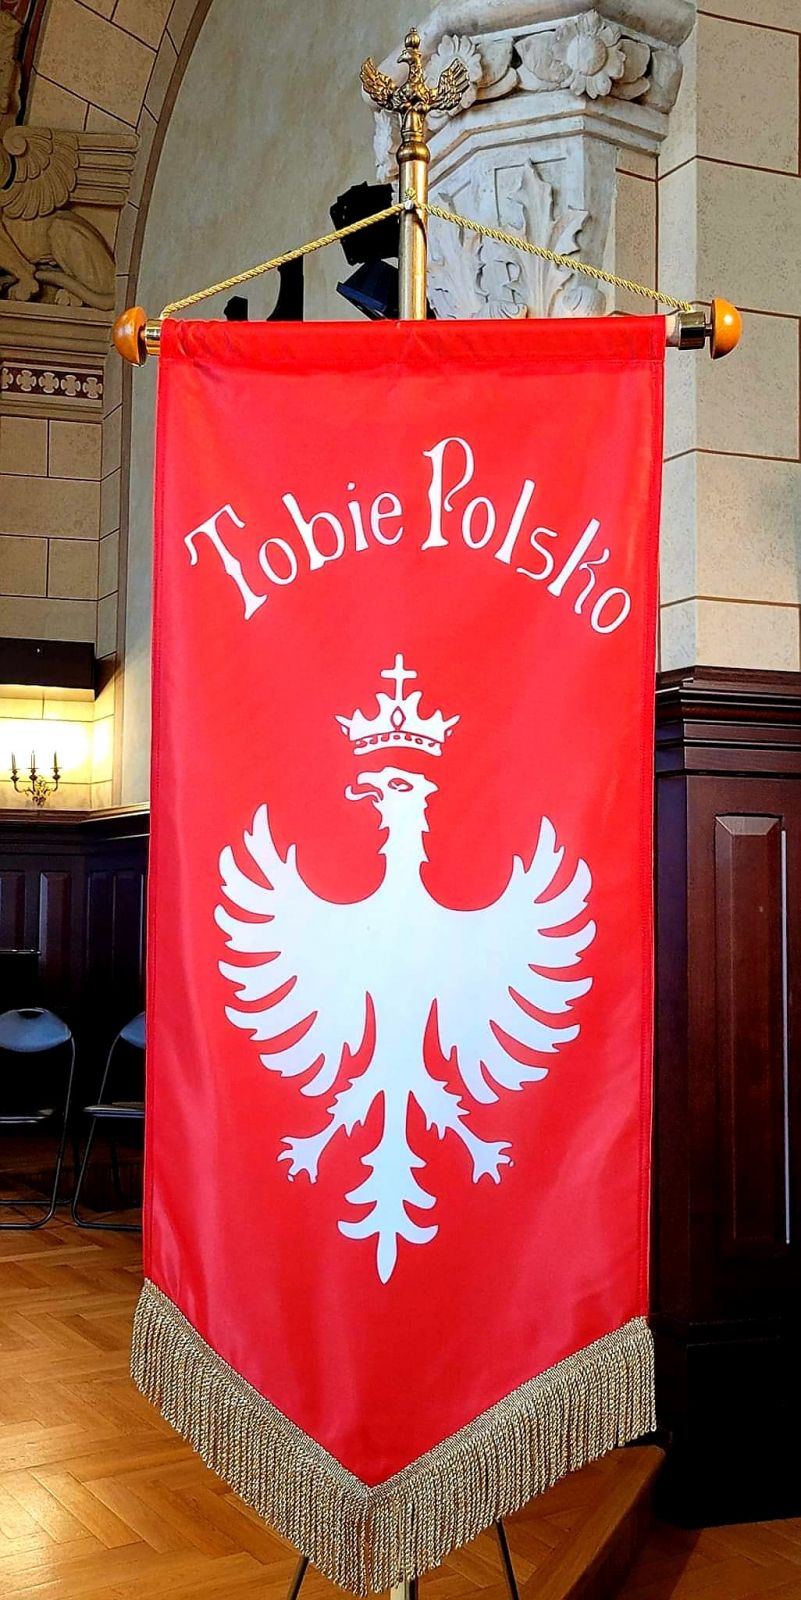 Tobie Polsko